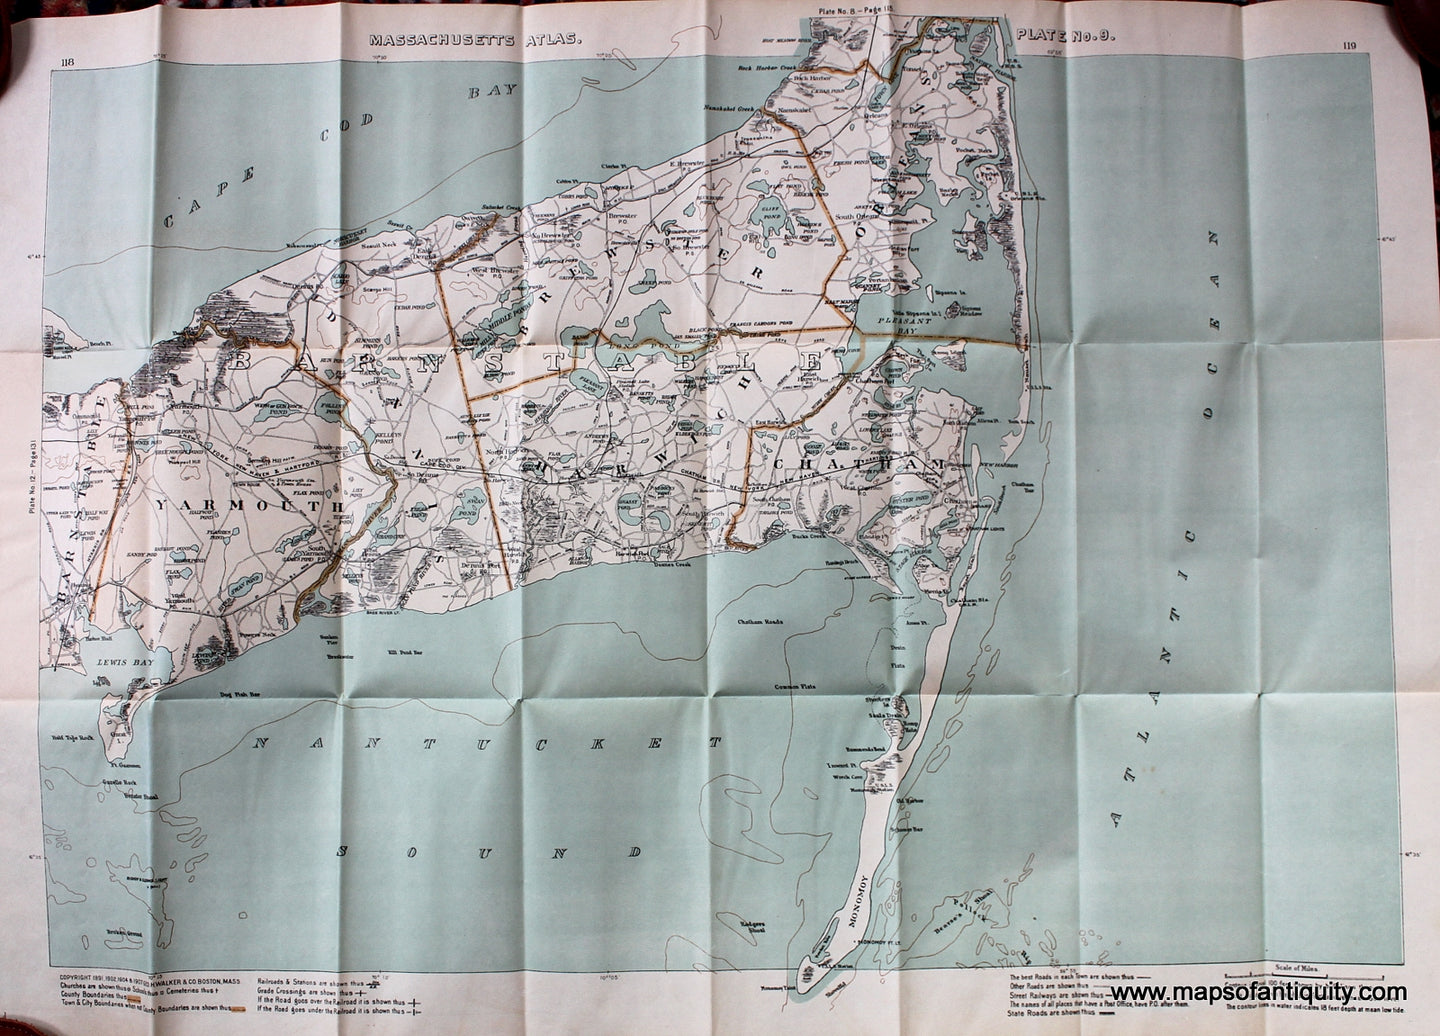 Antique-Folding-Map-Plate-No.-9-Massachusetts-Atlas.-Chatham-Cape-Cod-1906-Walker-Maps-Of-Antiquity